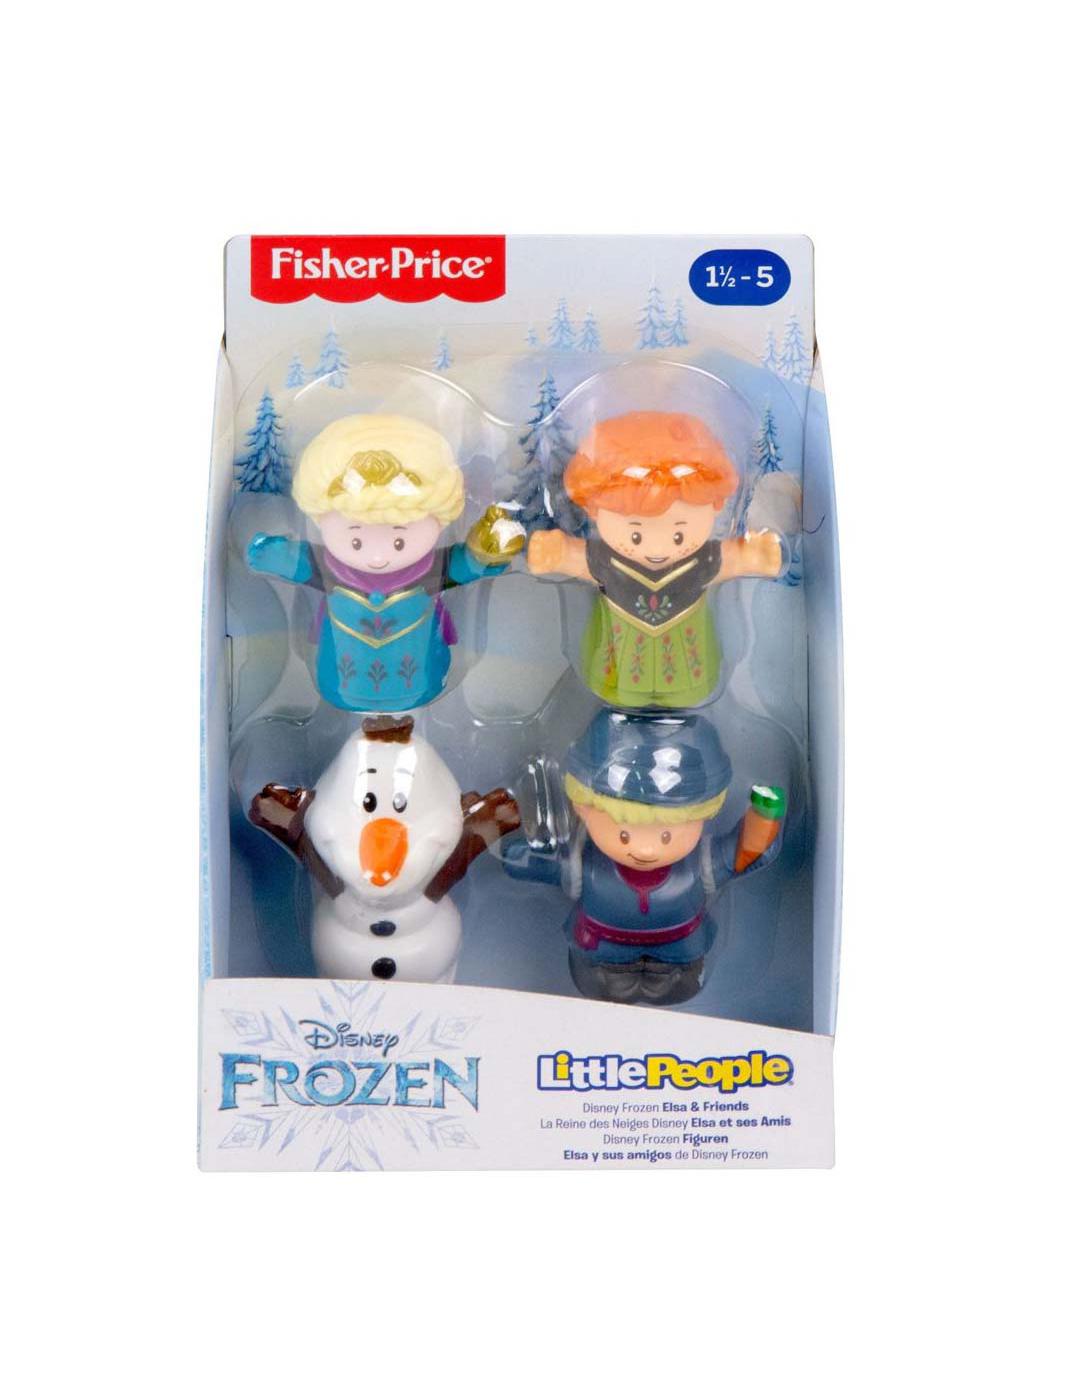 Fisher-Price Little People Frozen 2 Elsa & Friends Figures; image 2 of 2